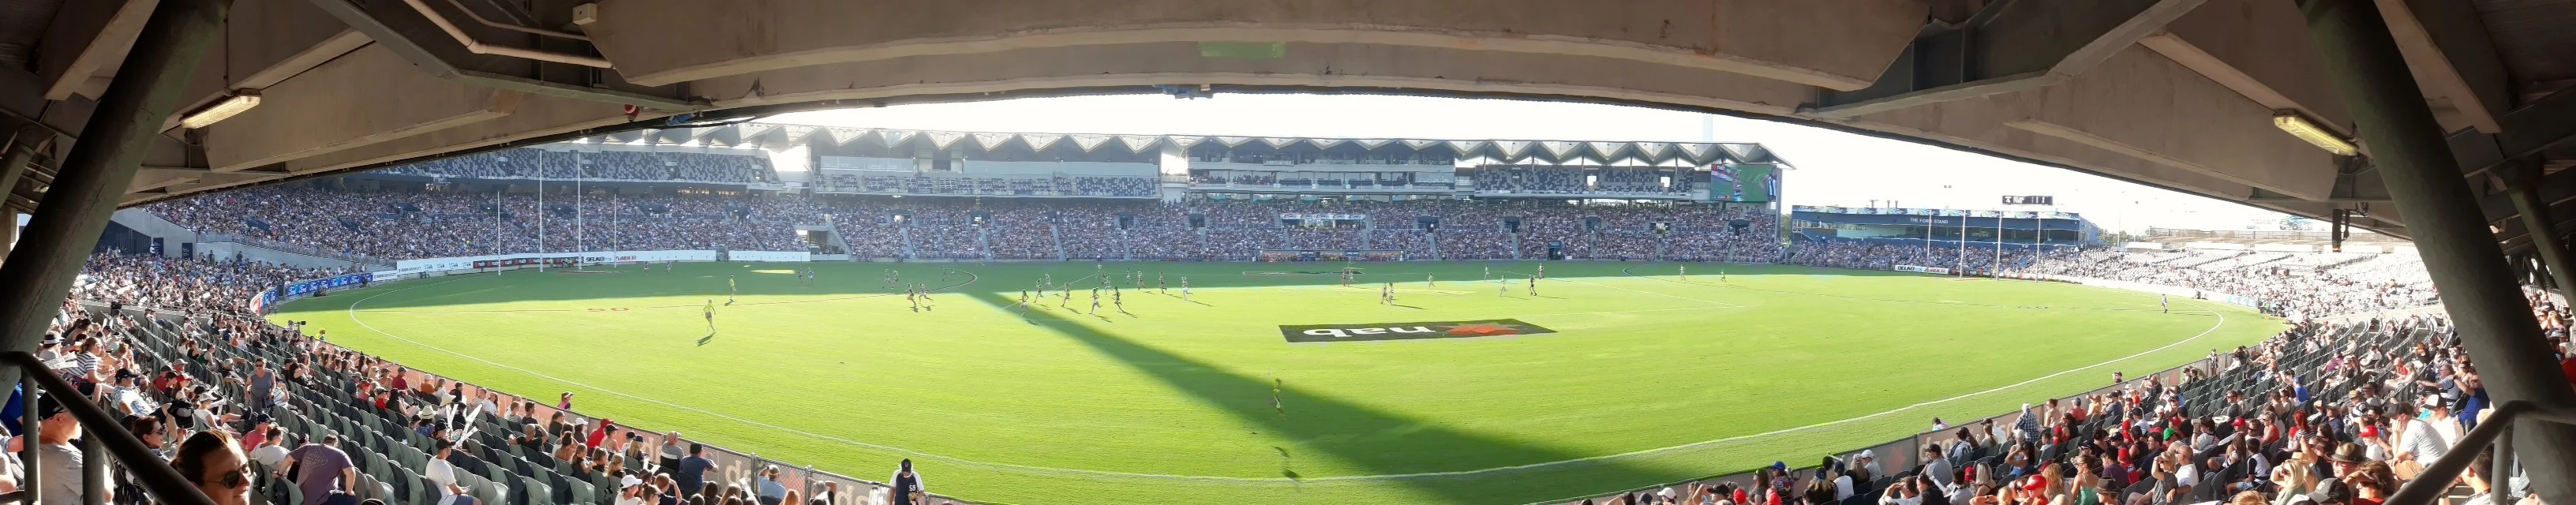 View onto the football field at an AFL match at GHMBA Stadium at Kardinia Park, Geelong